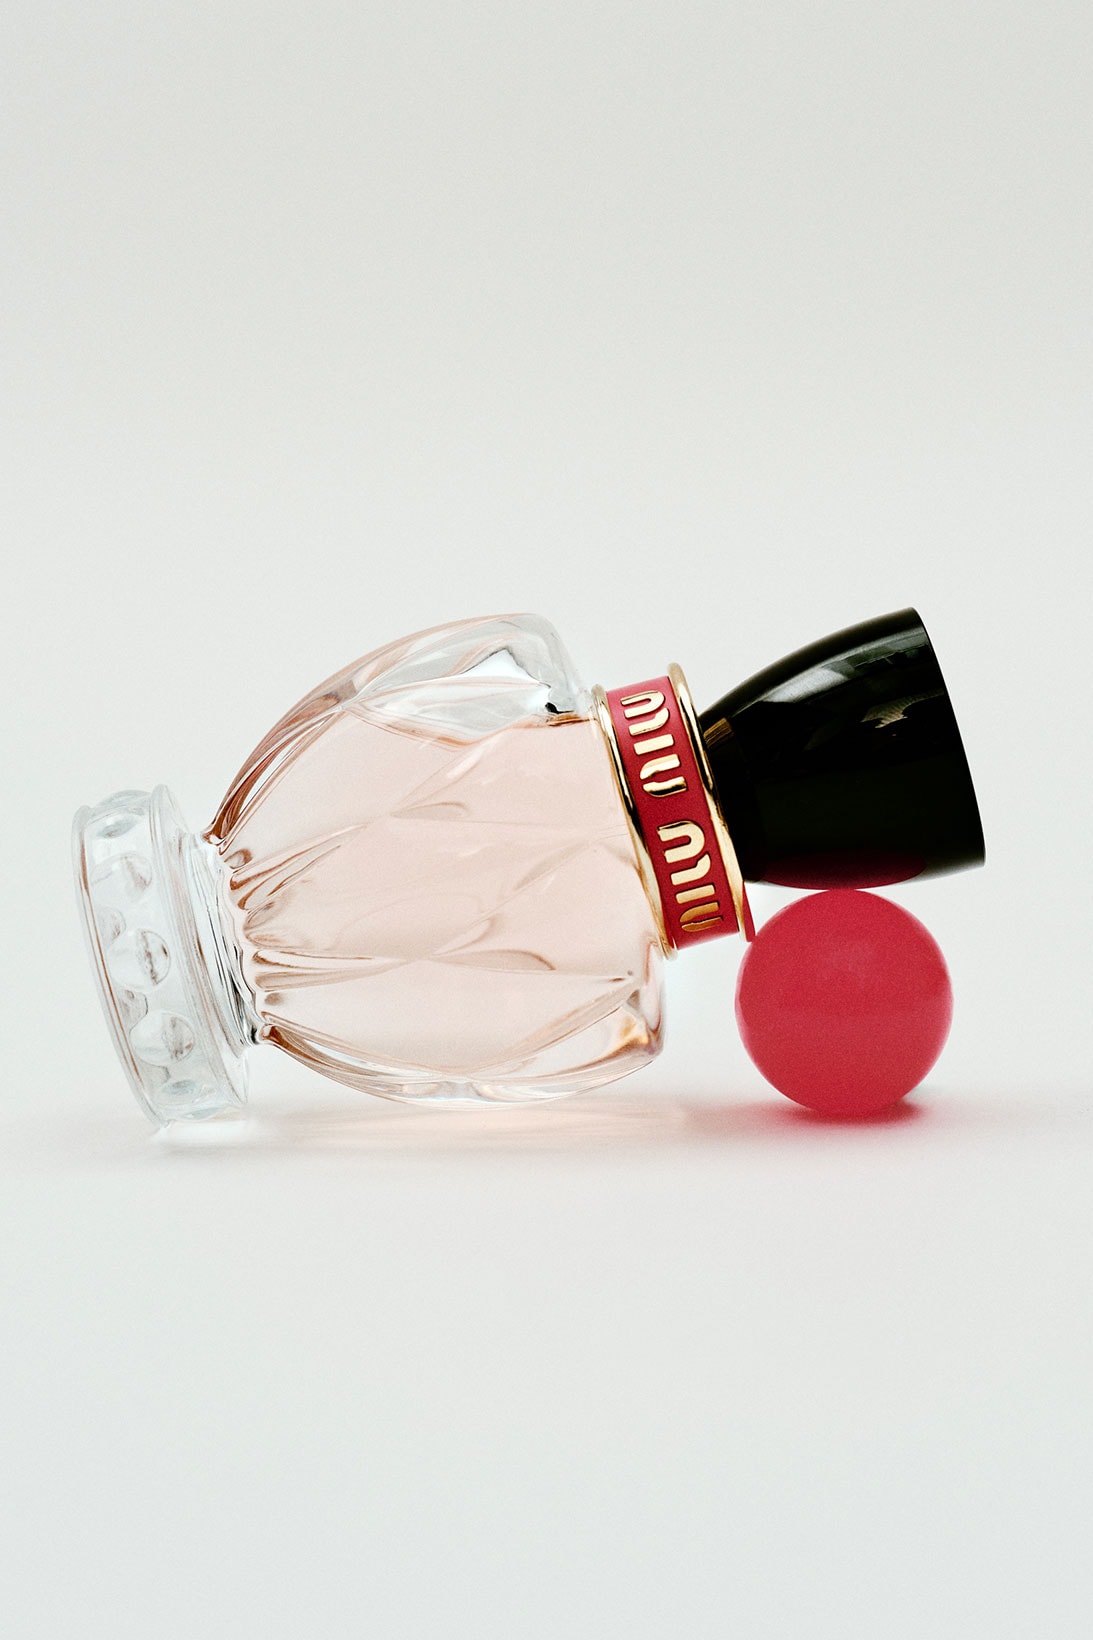 Miu Miu Qixi Chinese Valentine's Day Perfume Bottle